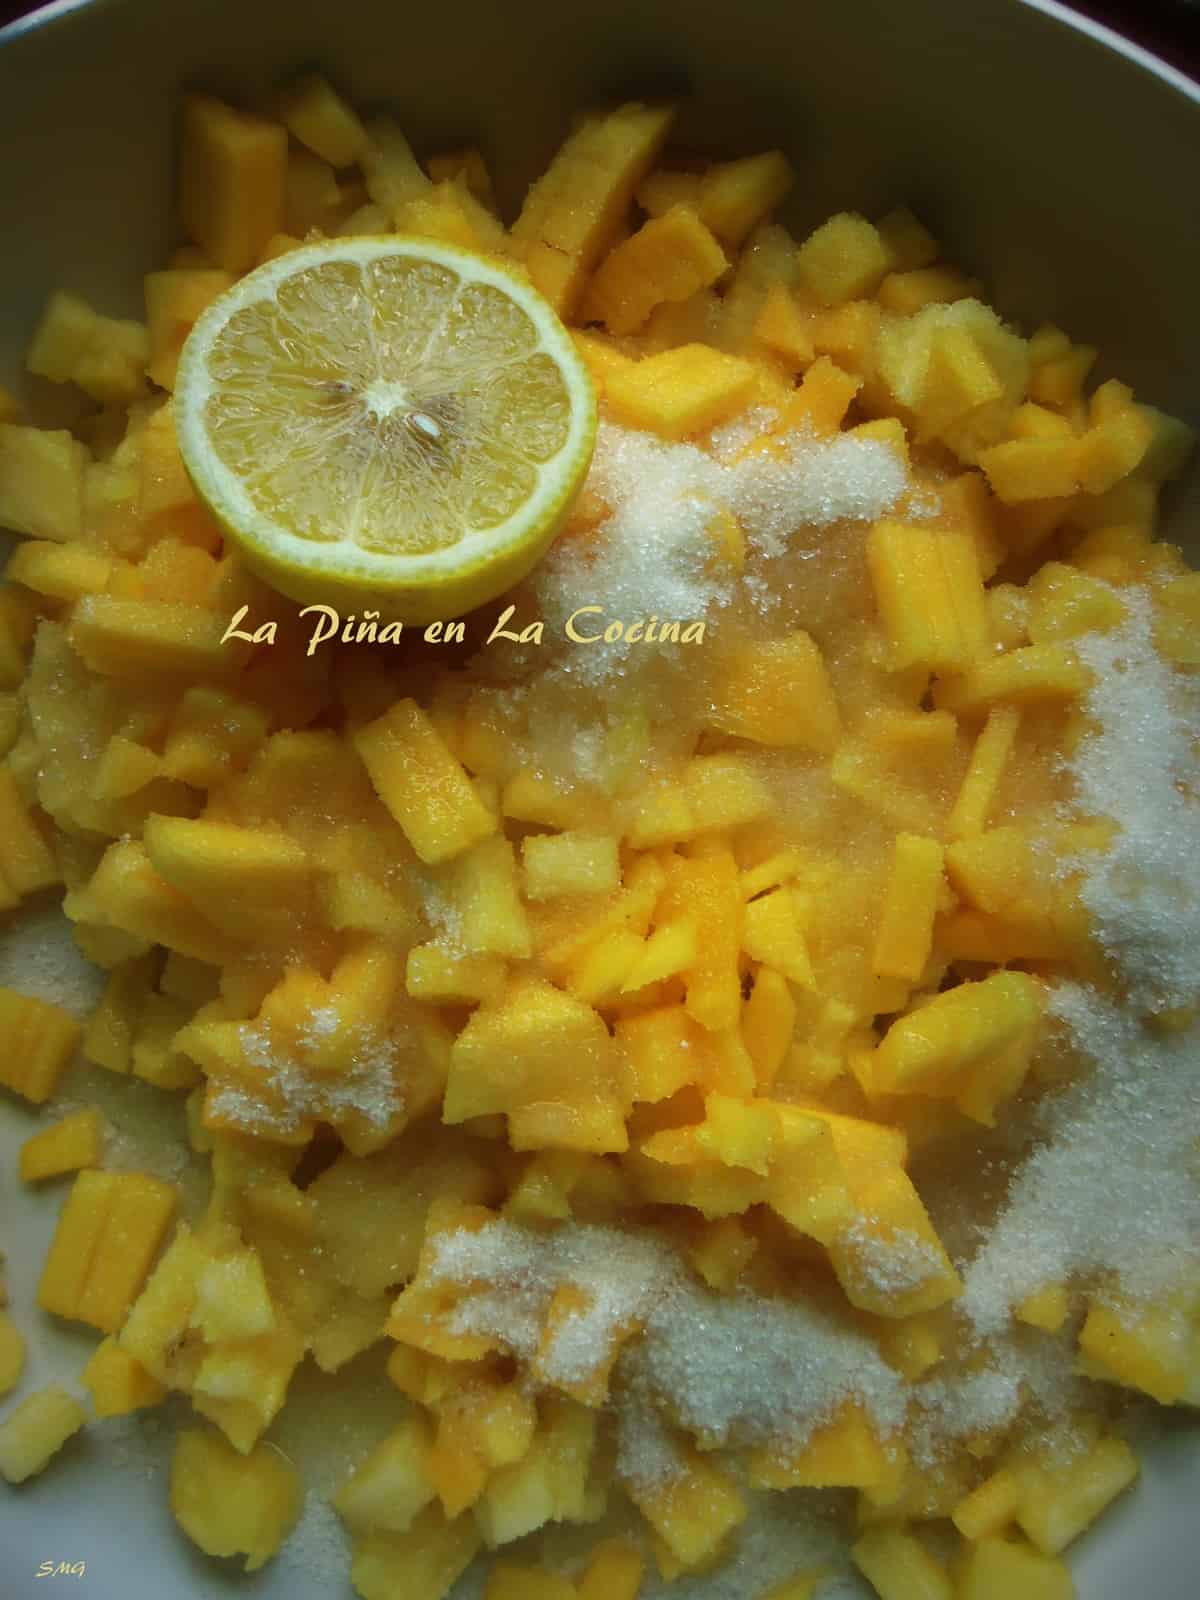 Fresh pineapple, mango and lemon juice...simple ingredients fot the best homemade filling!